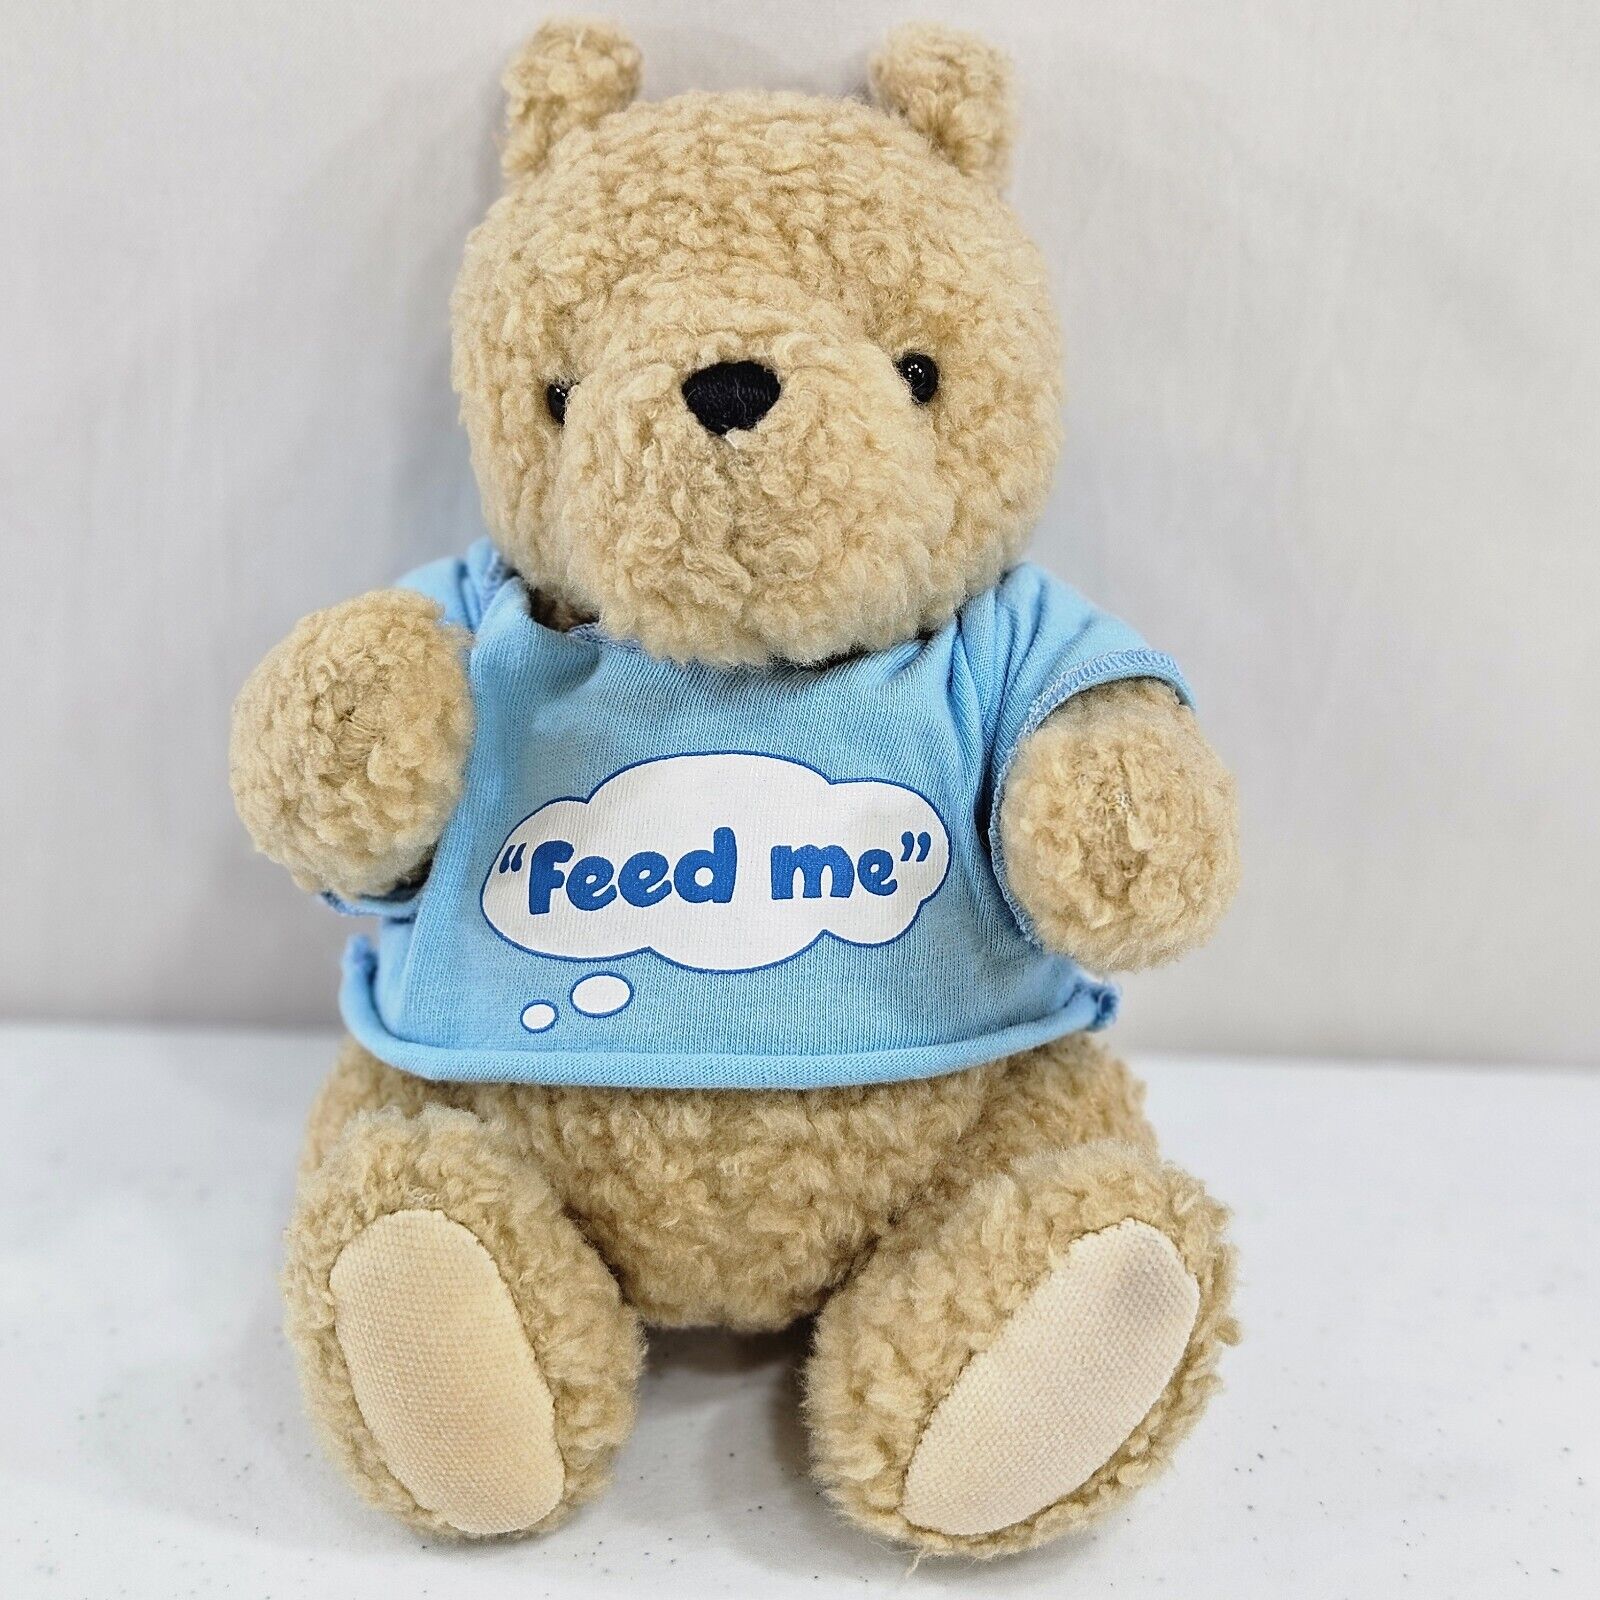 Gund Disney Winnie the Pooh Bear 8” Stuffed Animal Plush Toy Feed Me Blue Shirt